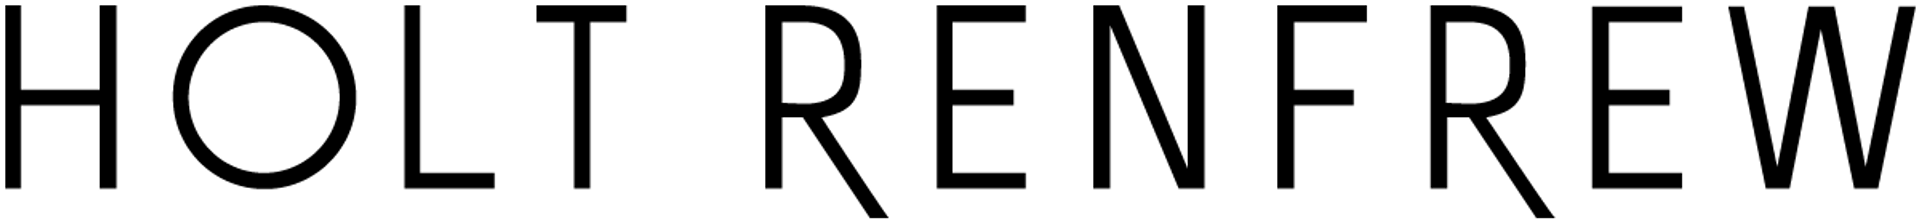 HOLT RENFREW logo de circulaires